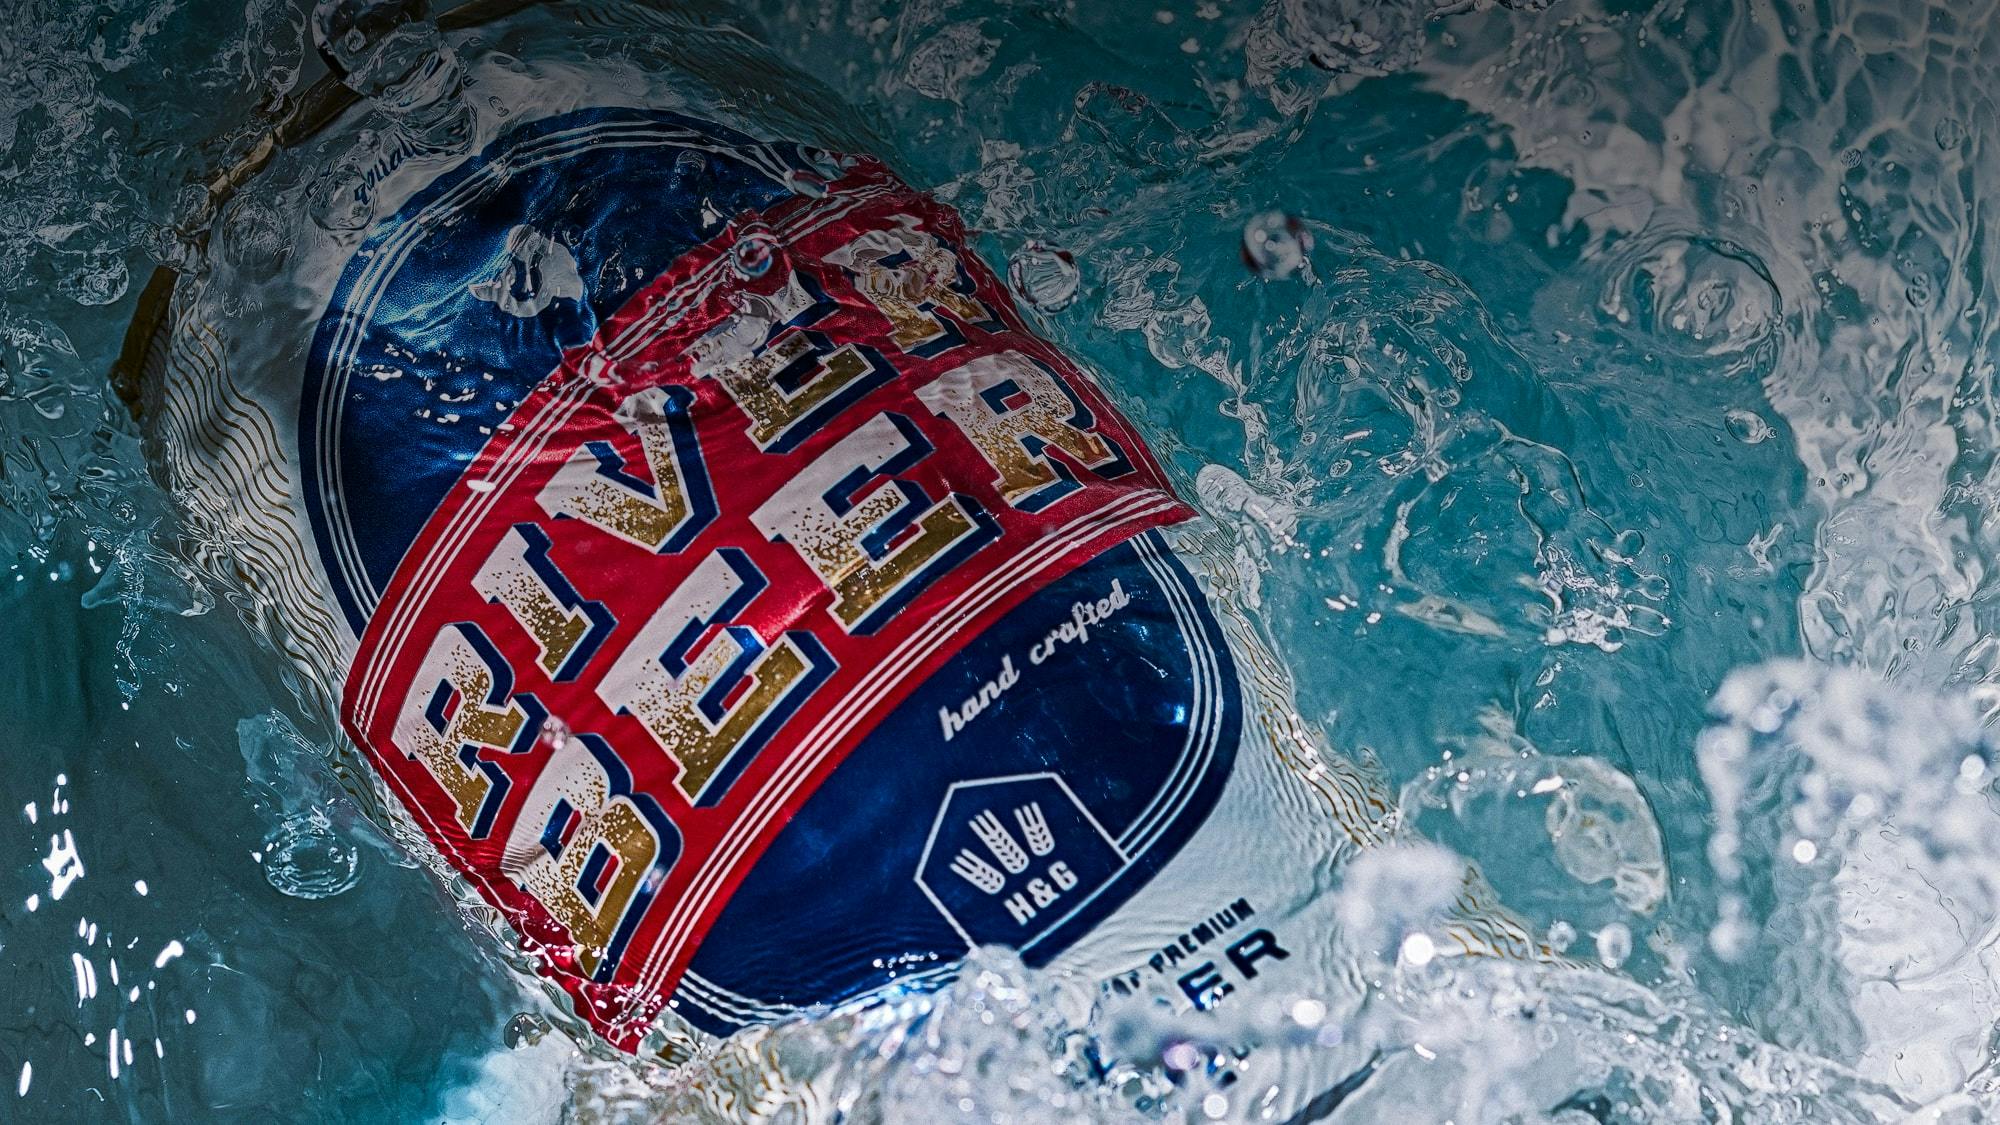 Beer splashing into water